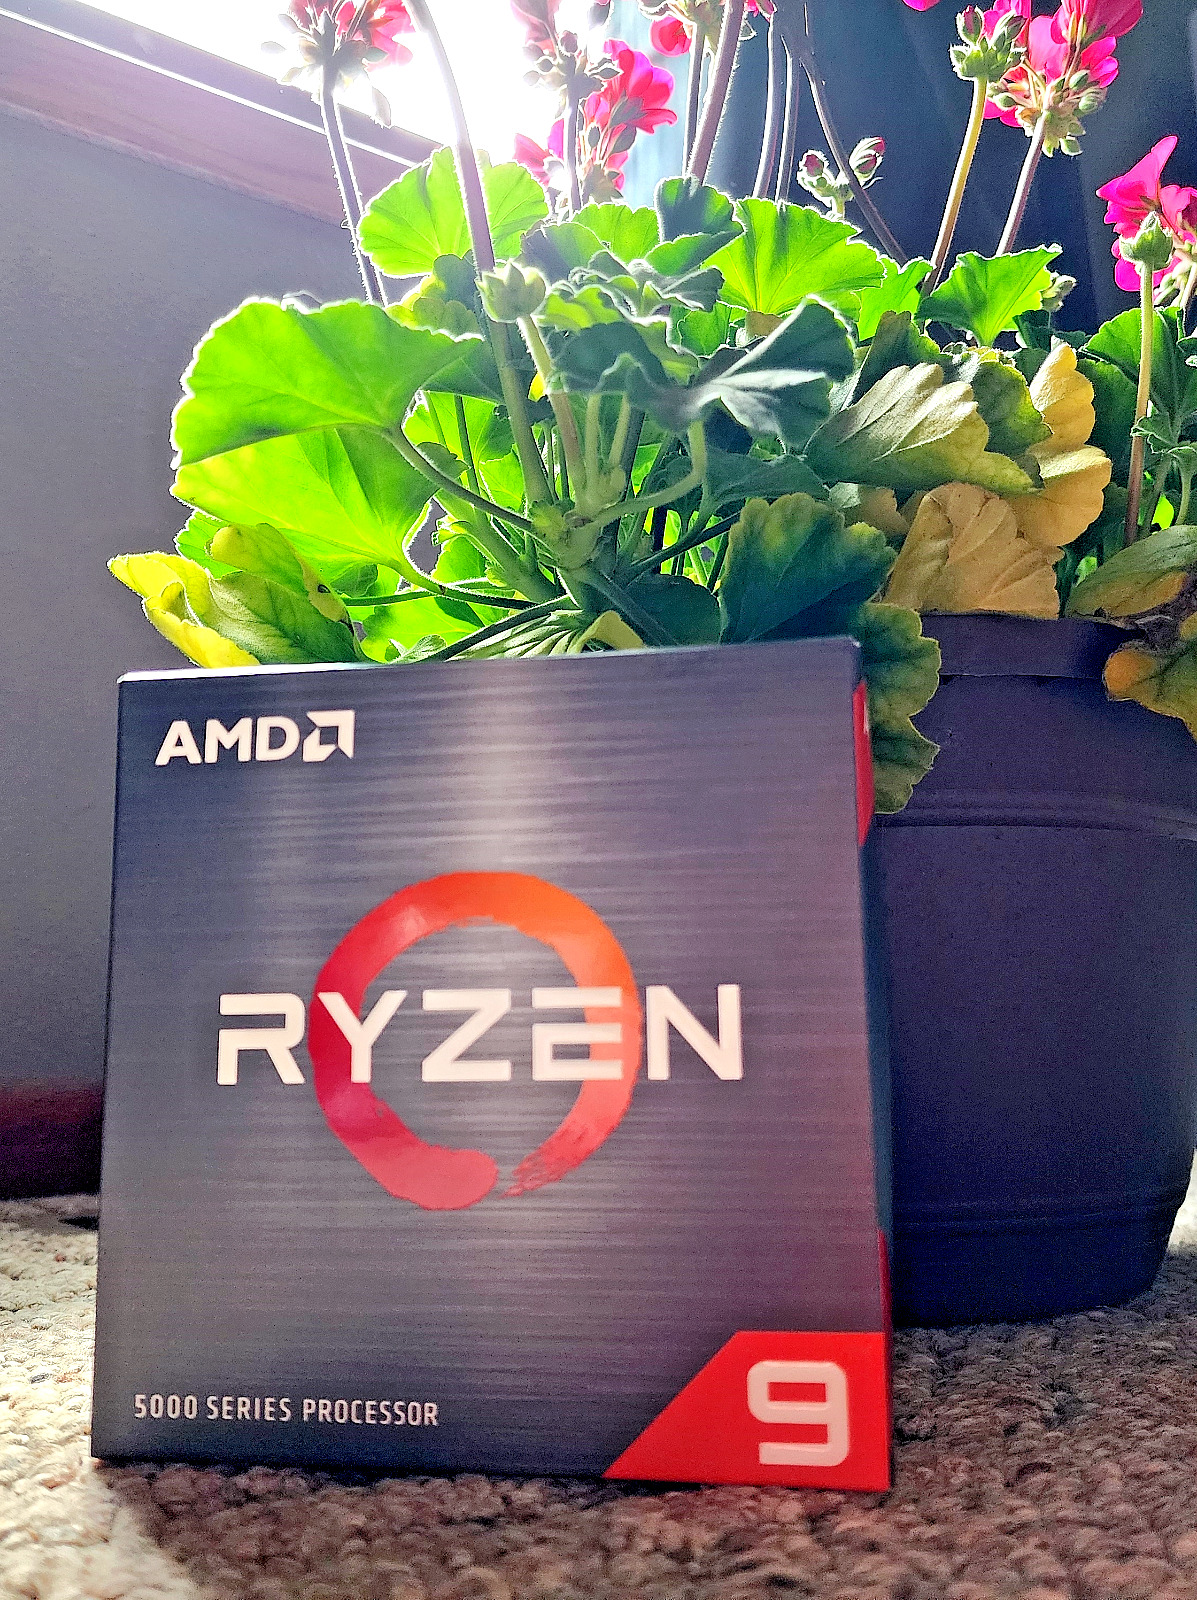 AMD Ryzen 9 5900X Desktop Processor (4.8GHz, 12 Cores, Socket AM4) w/ Box -...